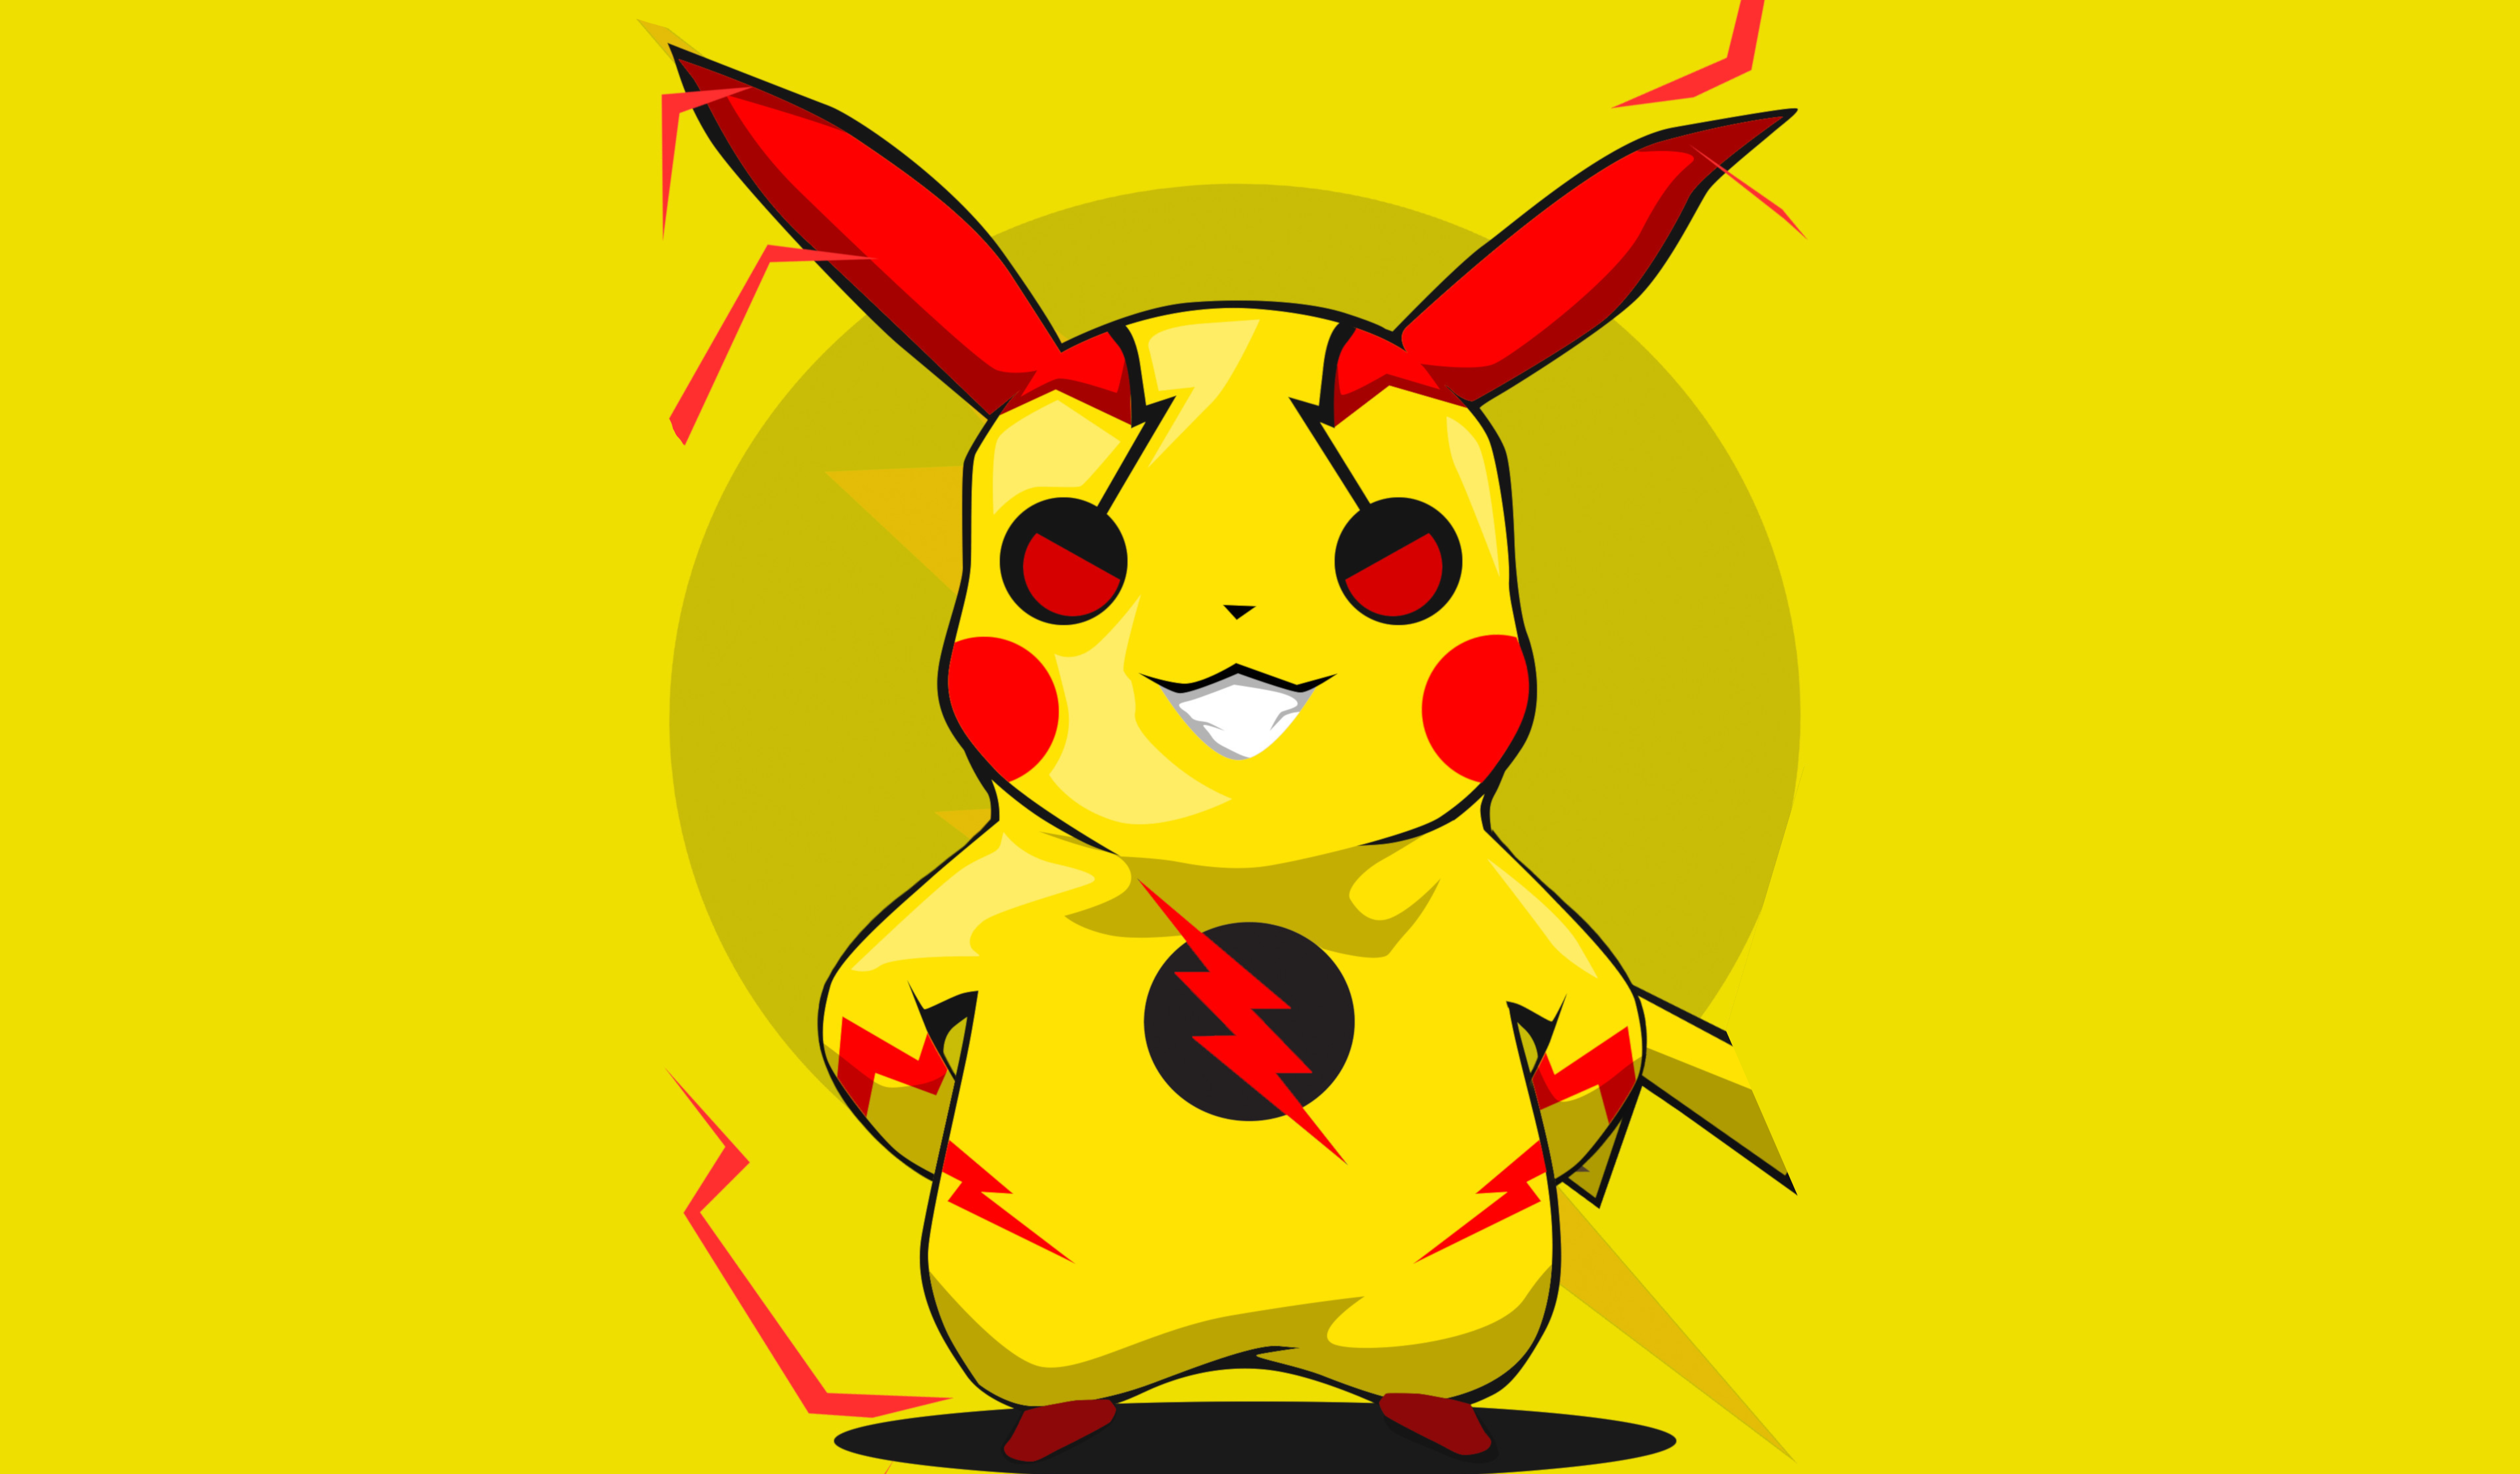 wallpaper de pikachu,cartoon,red,yellow,animated cartoon,pokémon